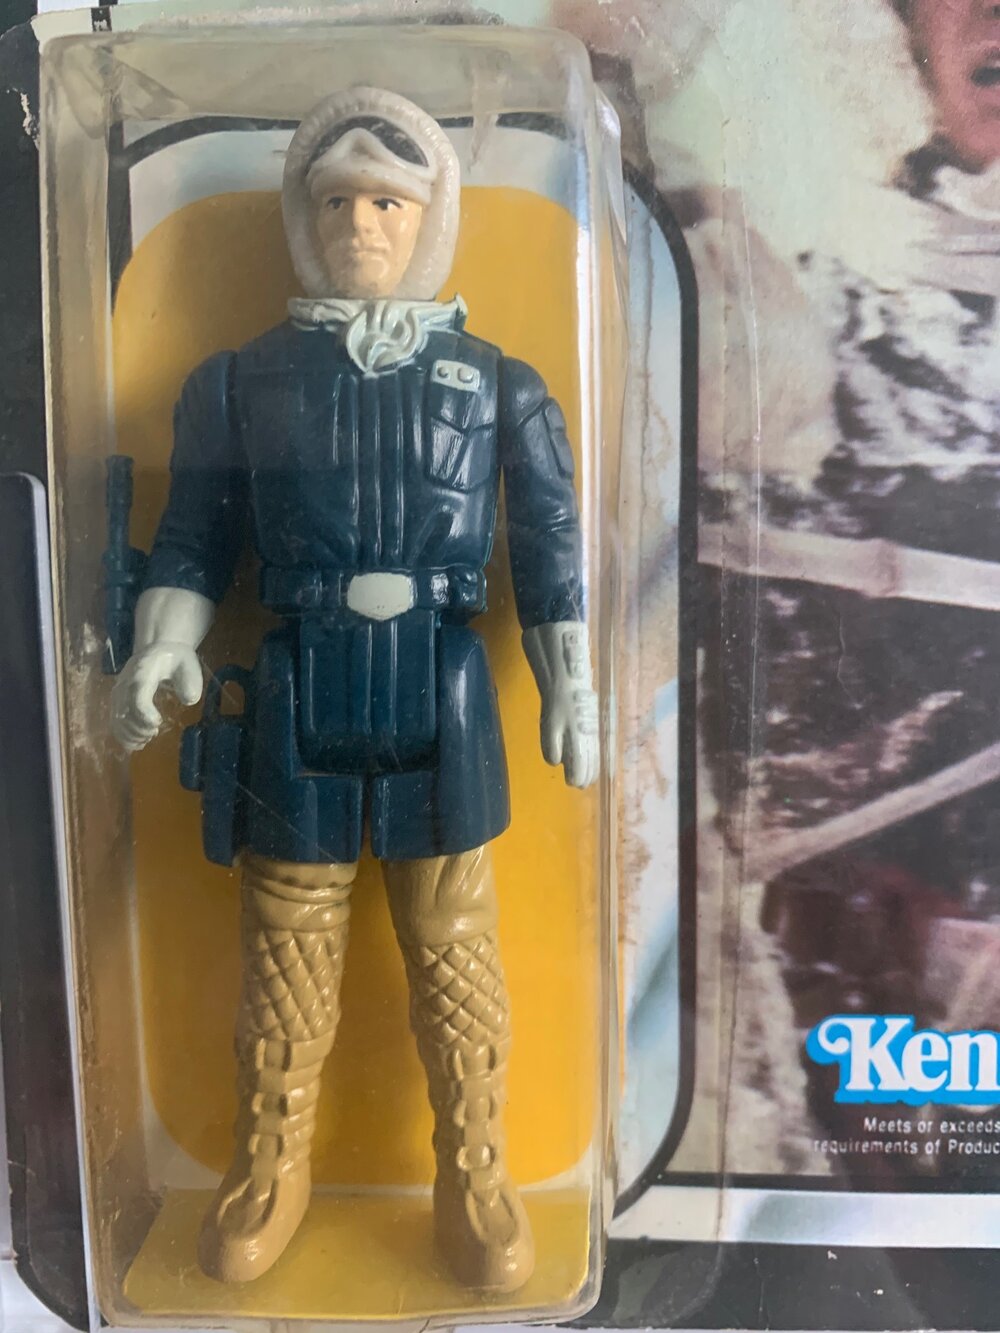 Han Solo (Hoth Outfit) - MOC Star Wars Action Figure ESB (Copy) — Retro Gram